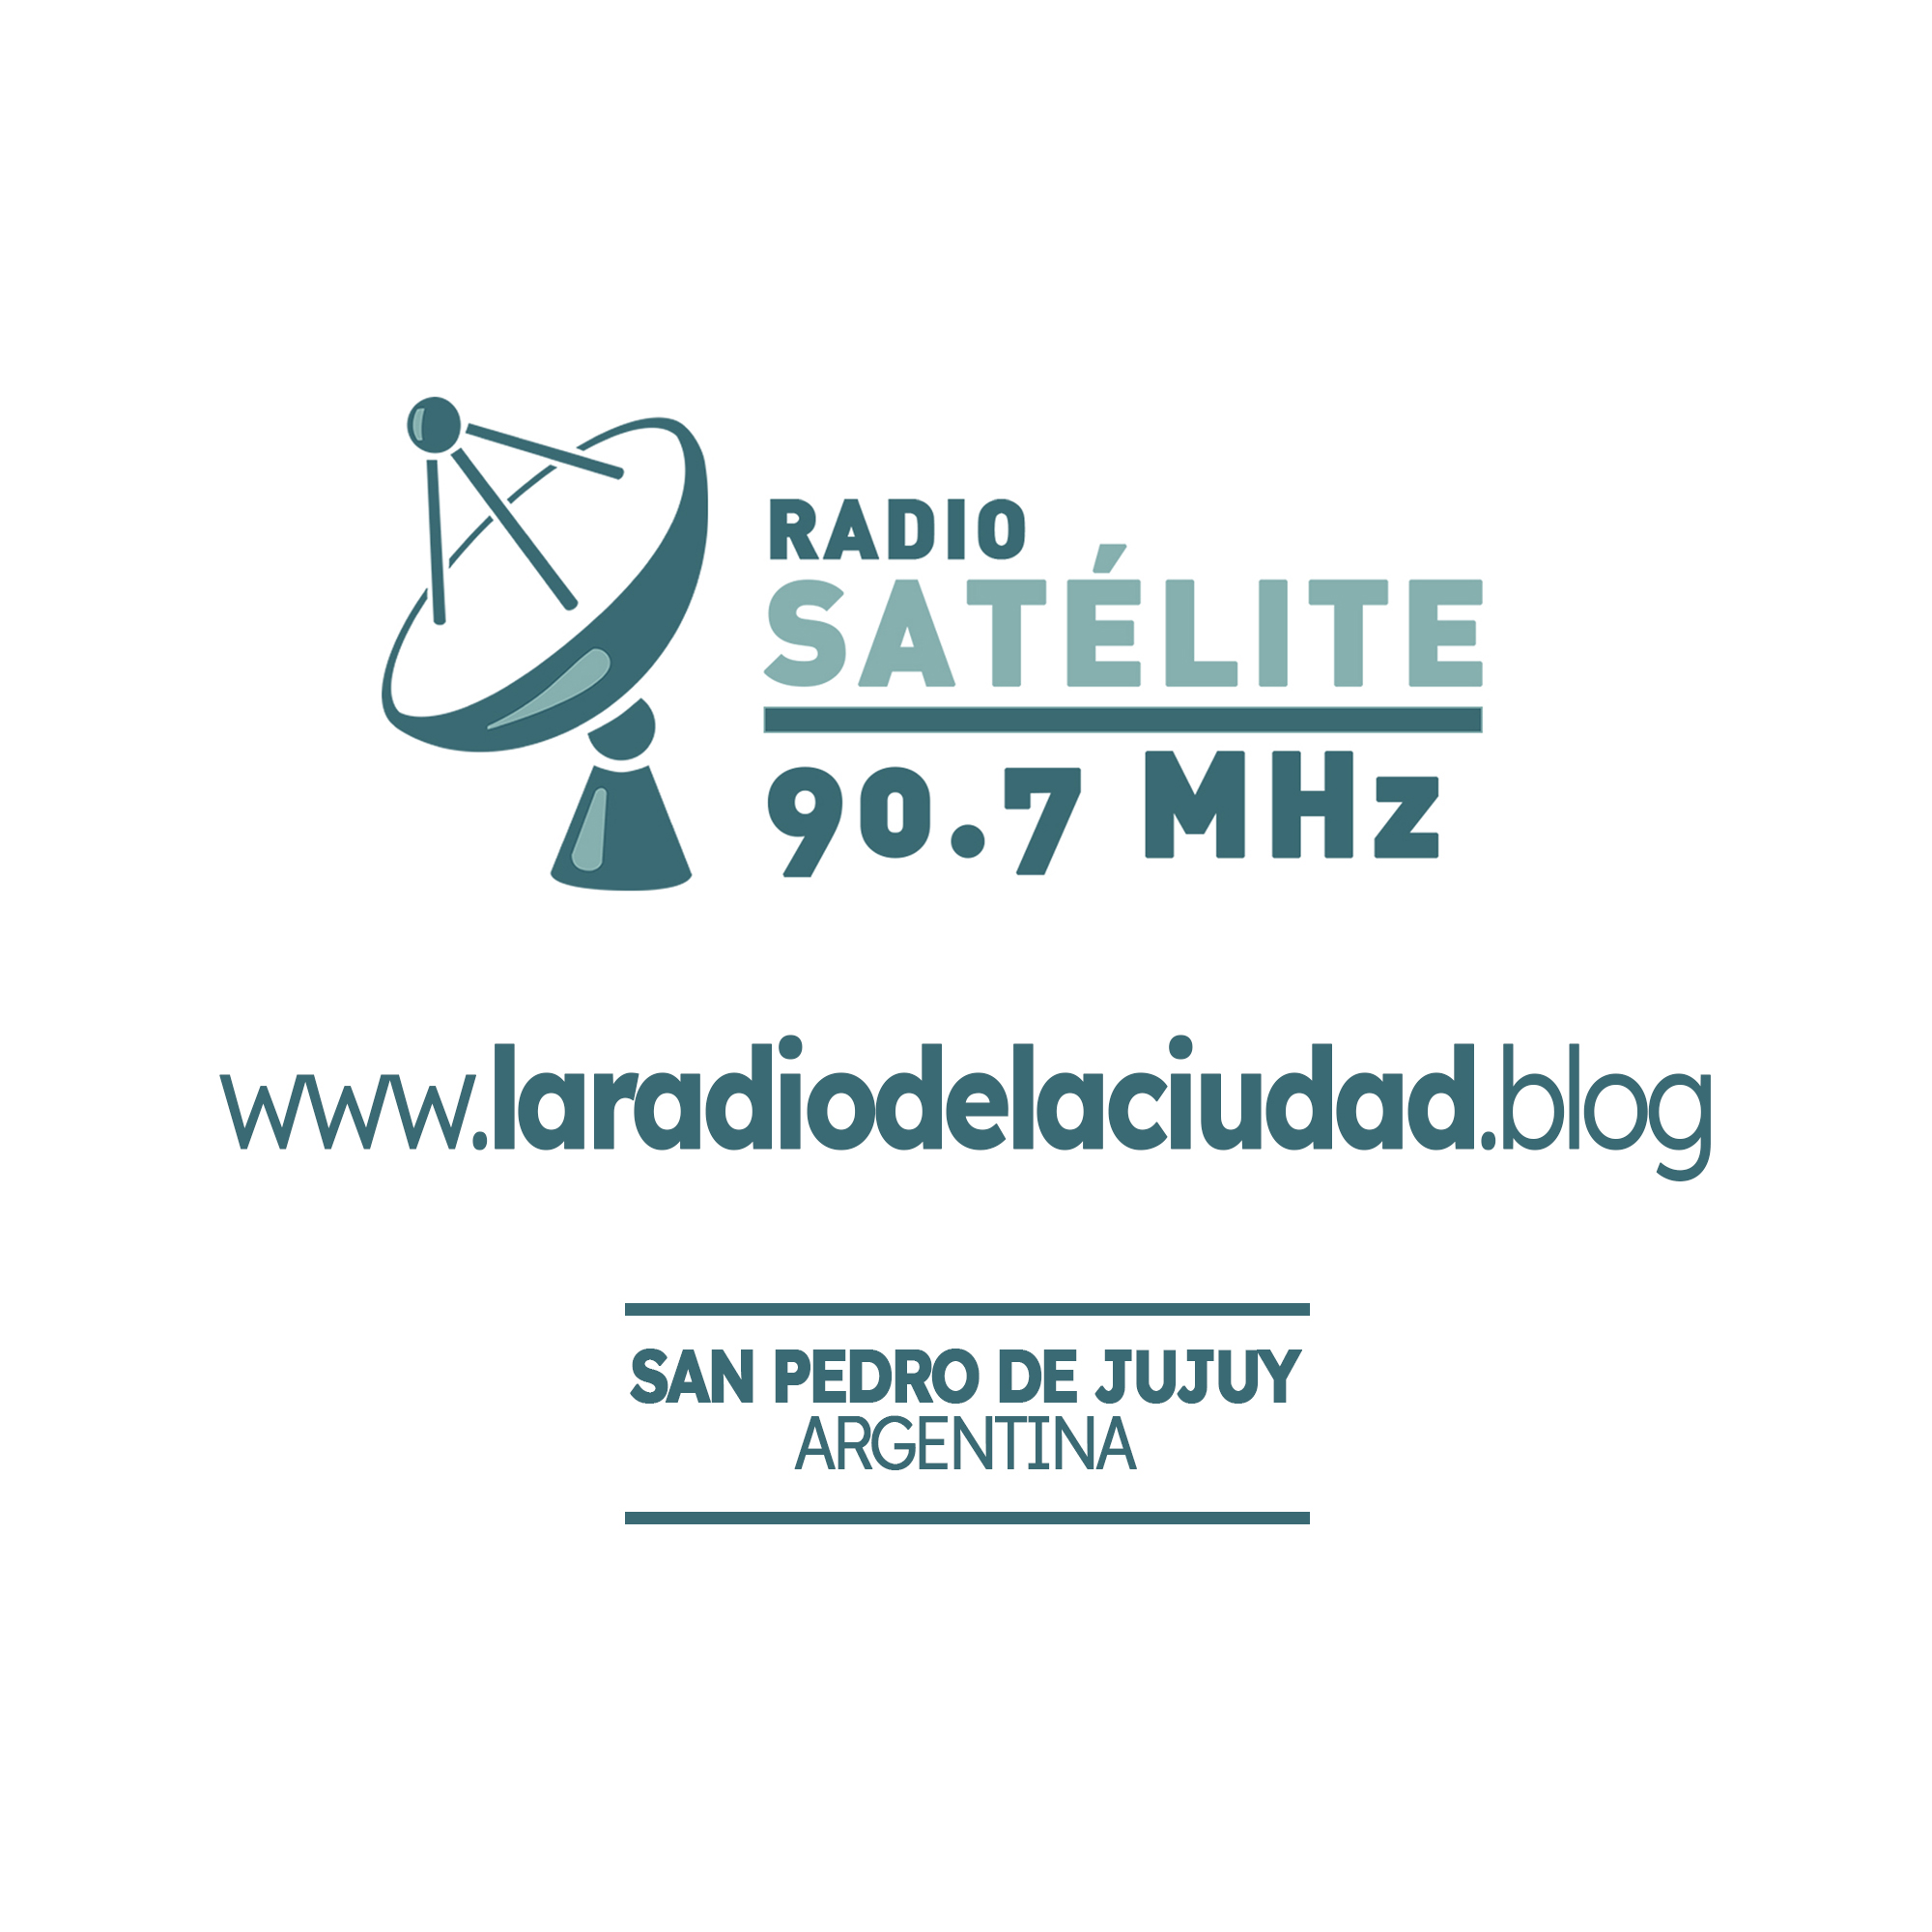 https://laradiodelaciudad.blog/wp-content/themes/radio-satelite/images/rs-default-thumbnail.jpg